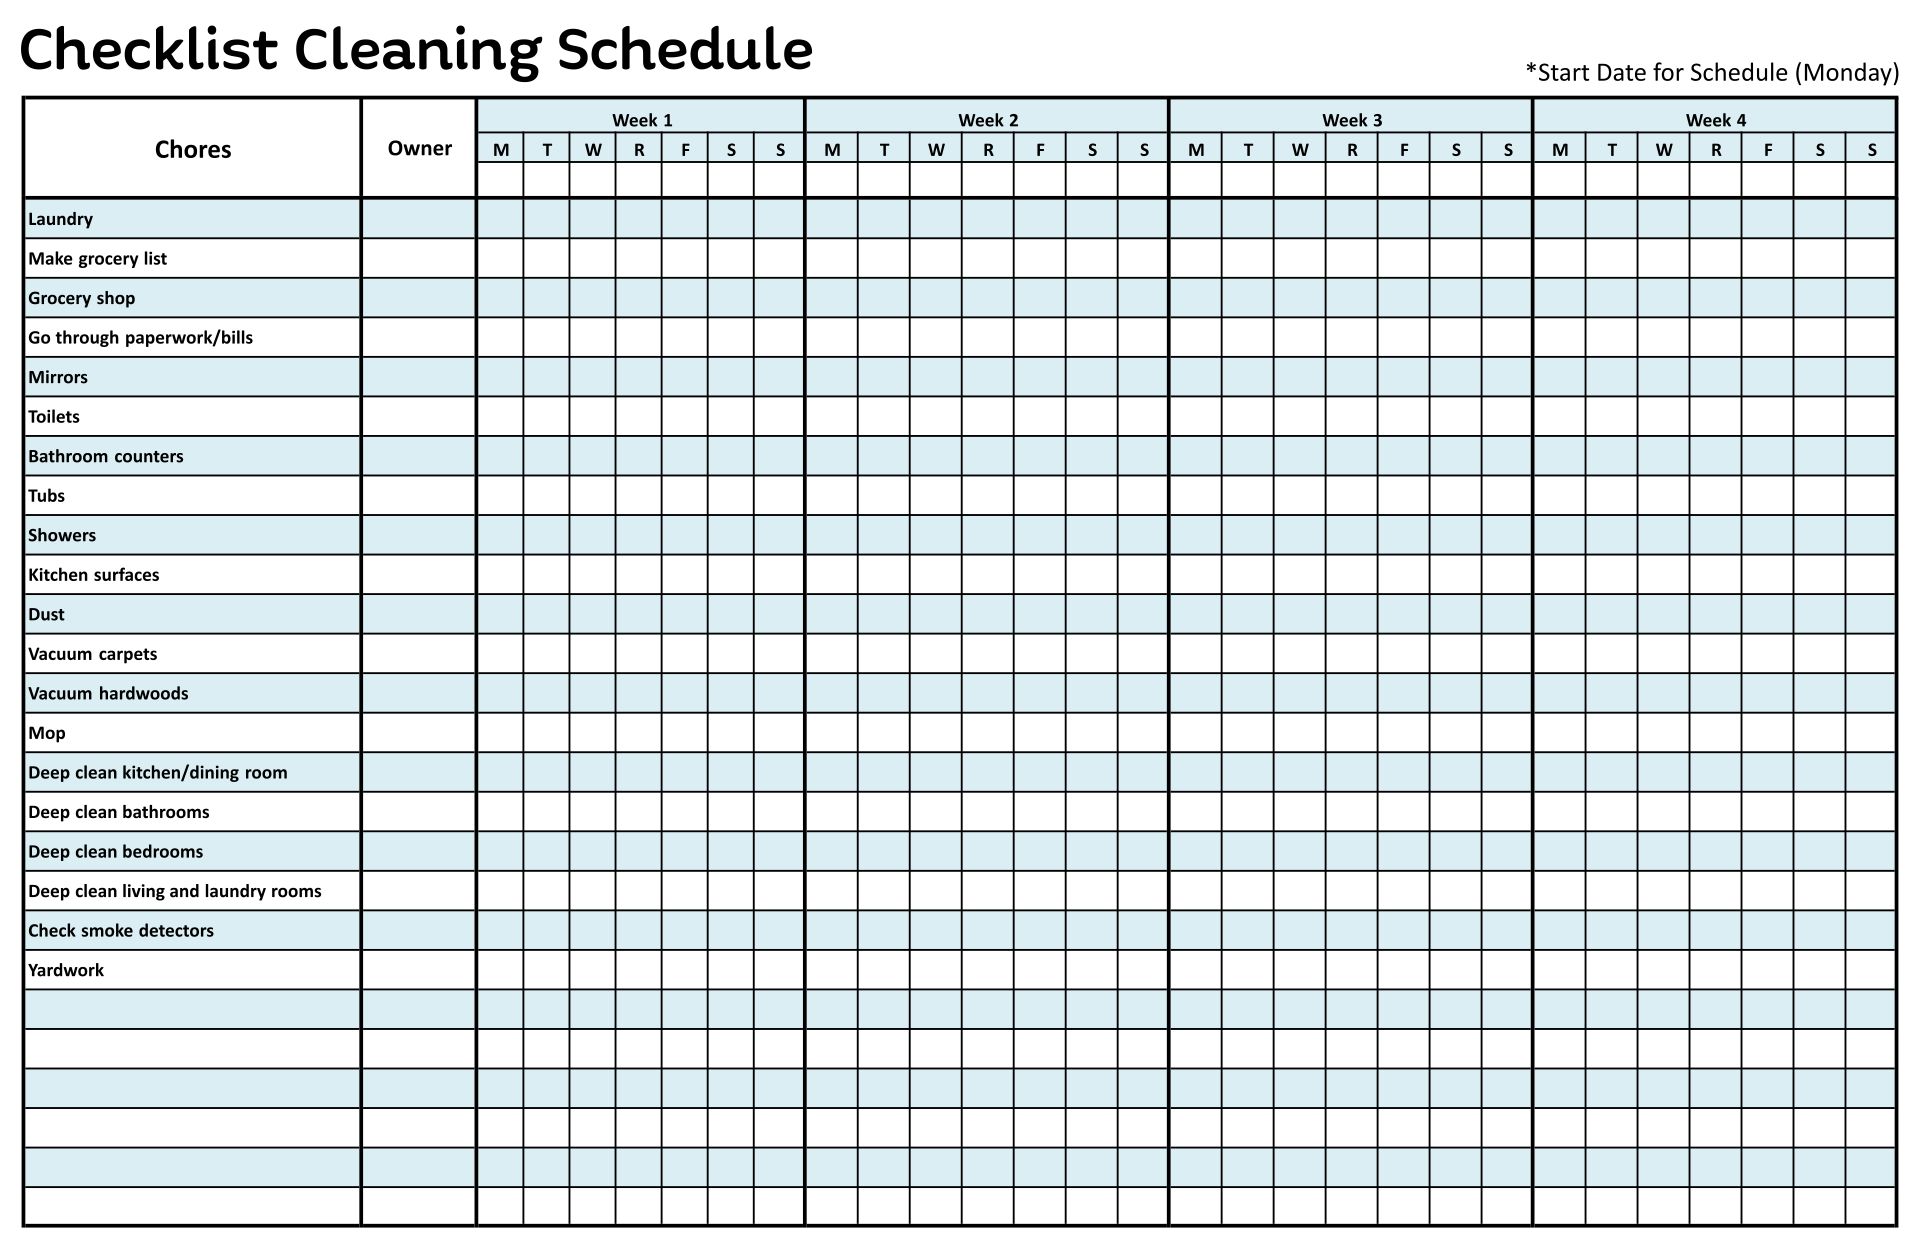 Checklist Cleaning Schedule Template